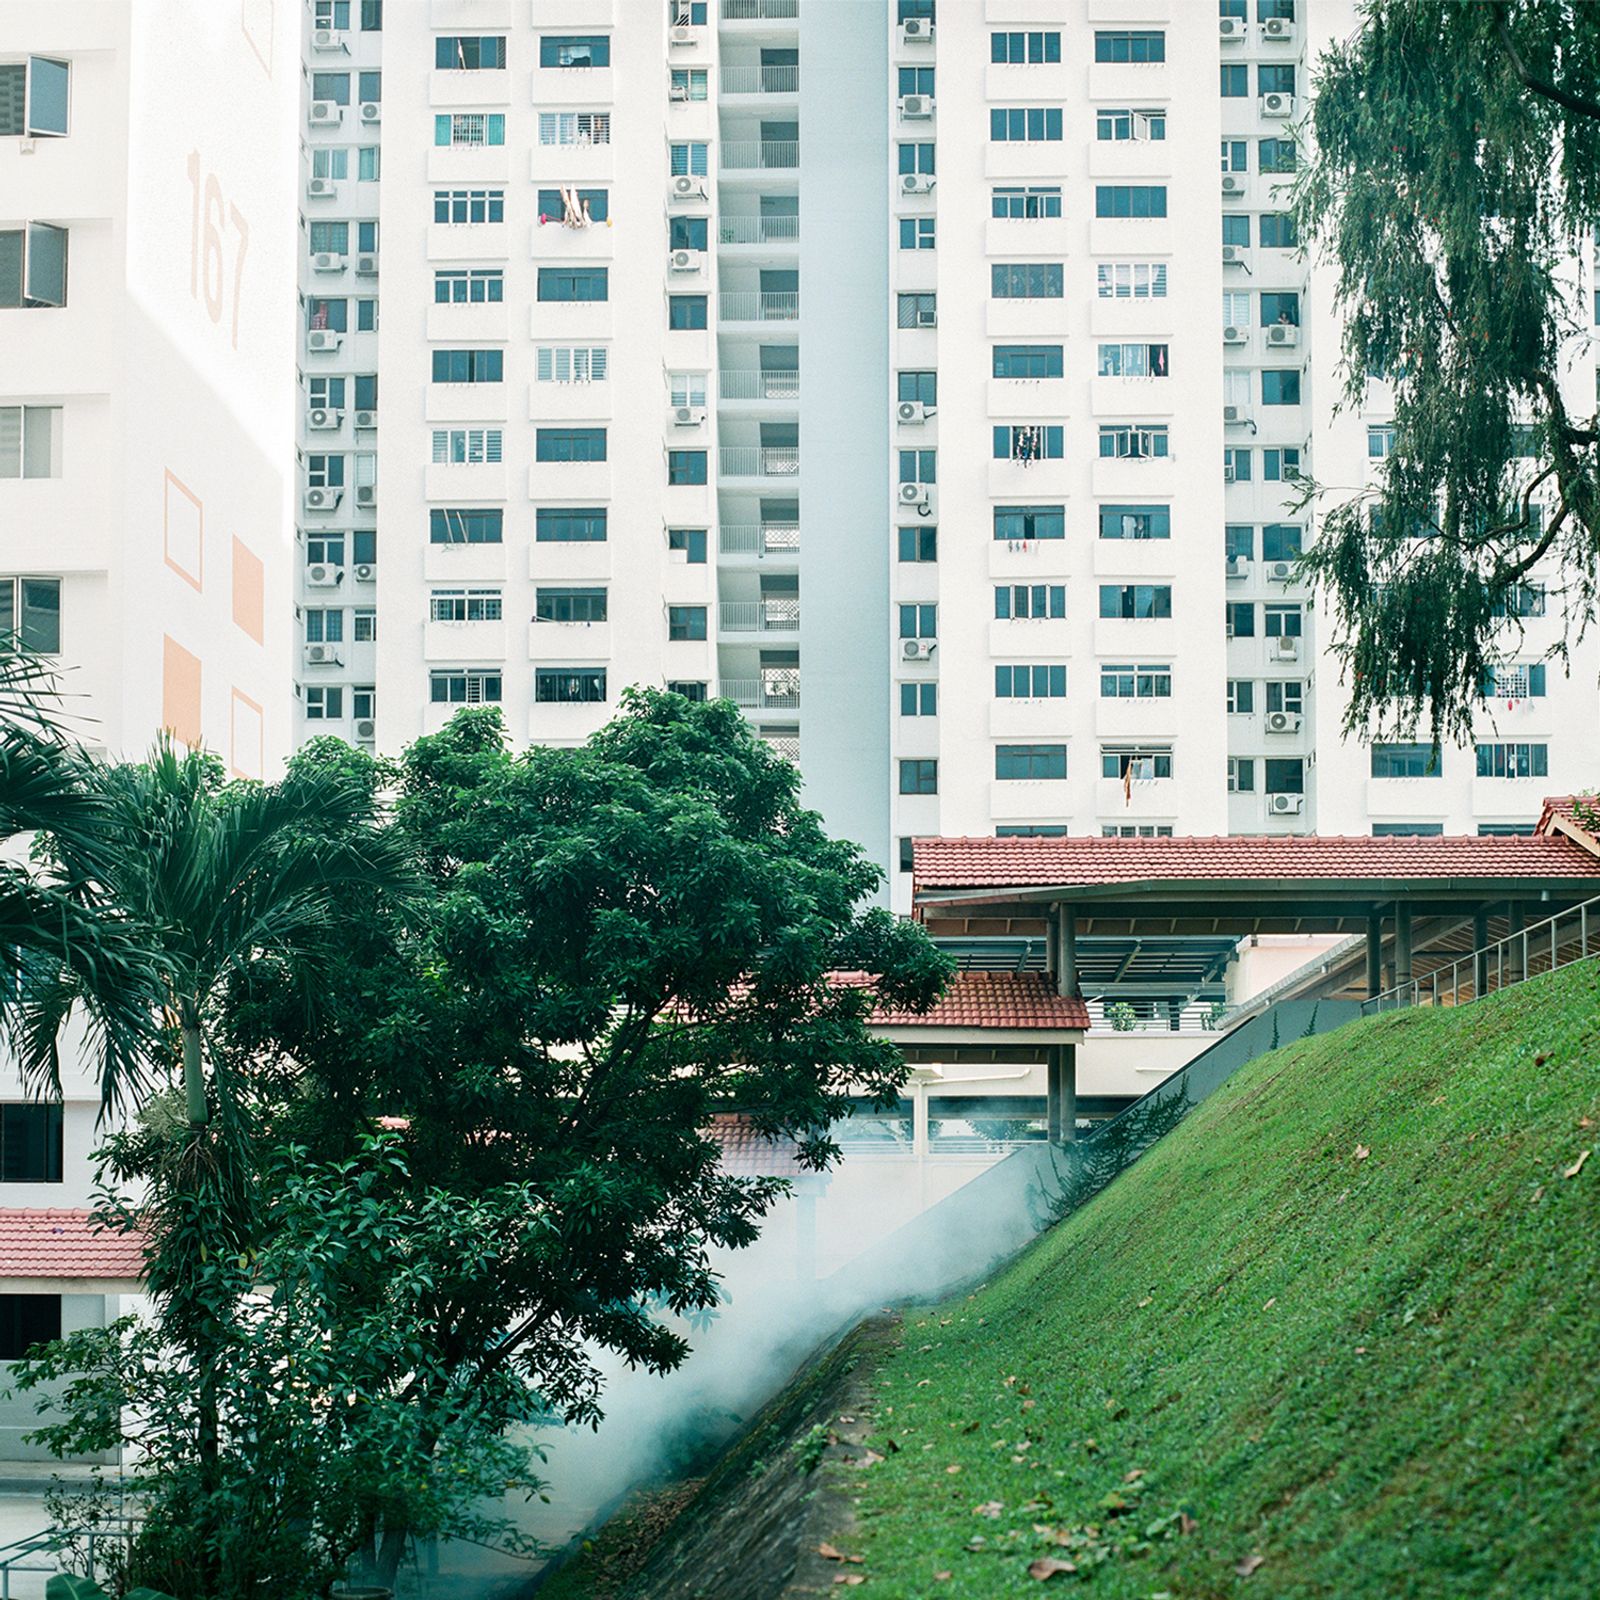 © Kathy Anne Lim - Uphill Rising, Singapore 2020